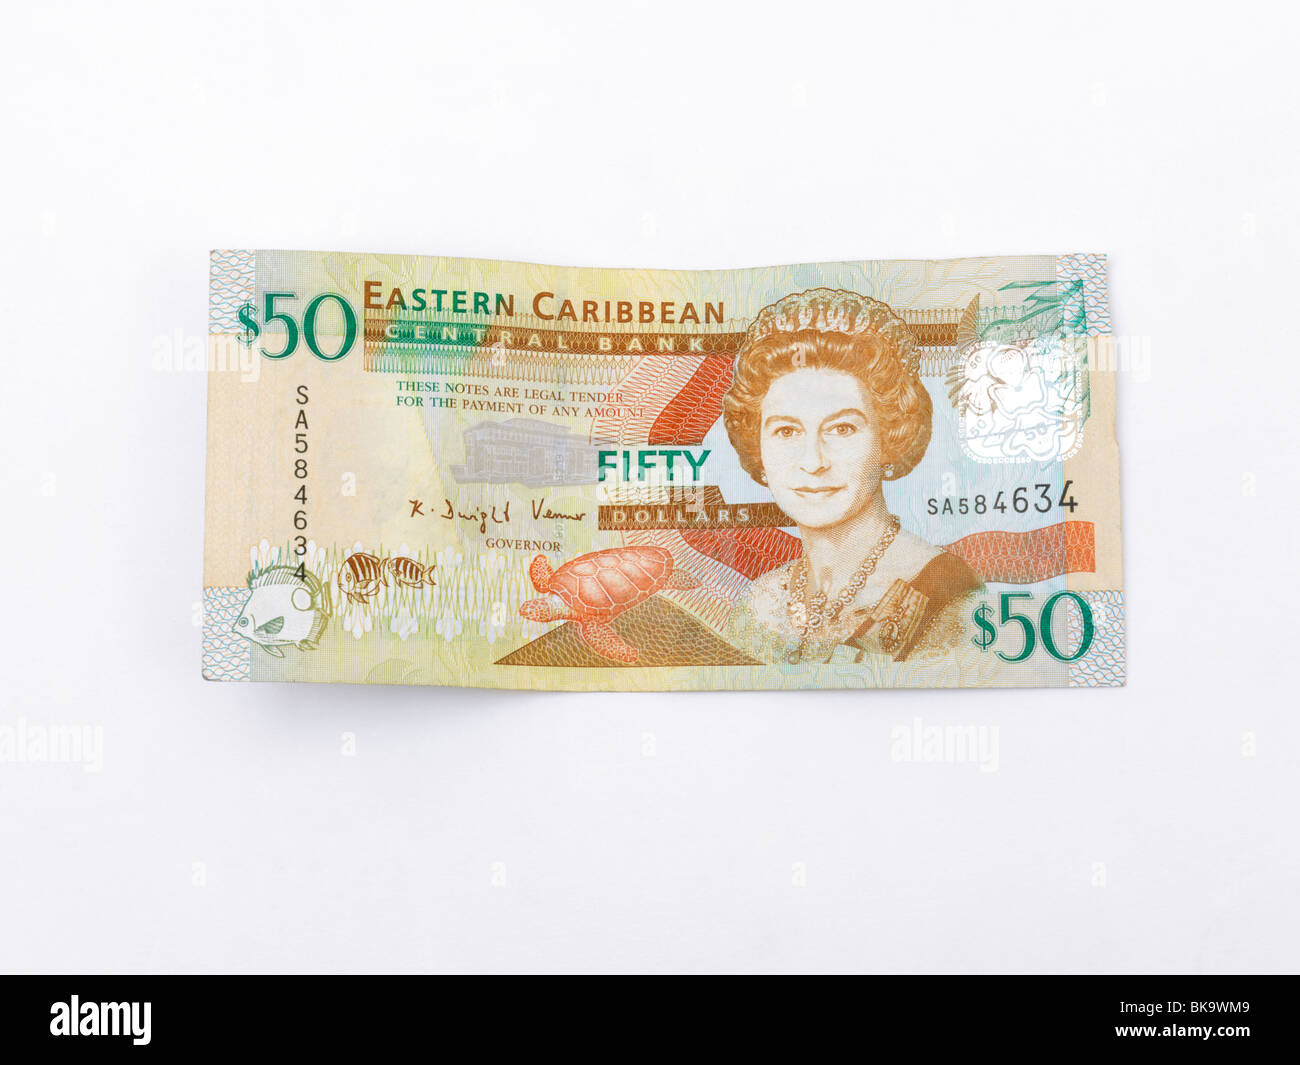 Eastern Caribbean Banknote 50 Dollars Stock Photo